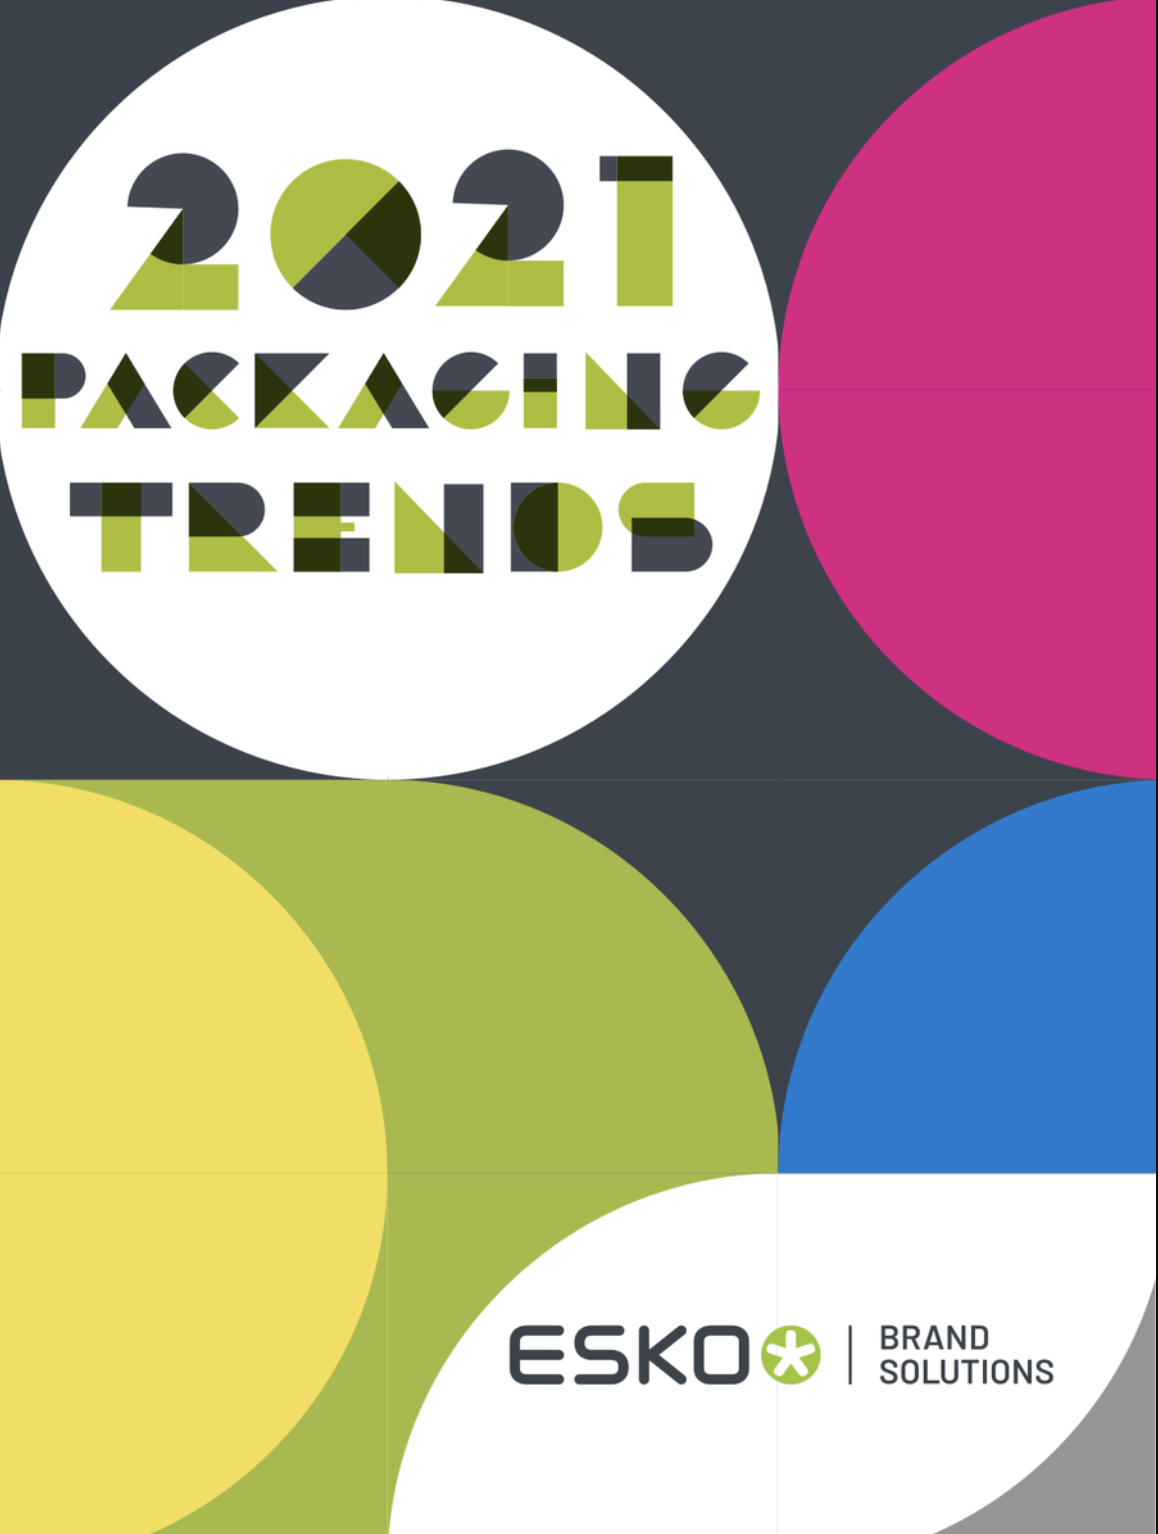 2021 Packaging Trends eBook from Esko | Brand Solutions